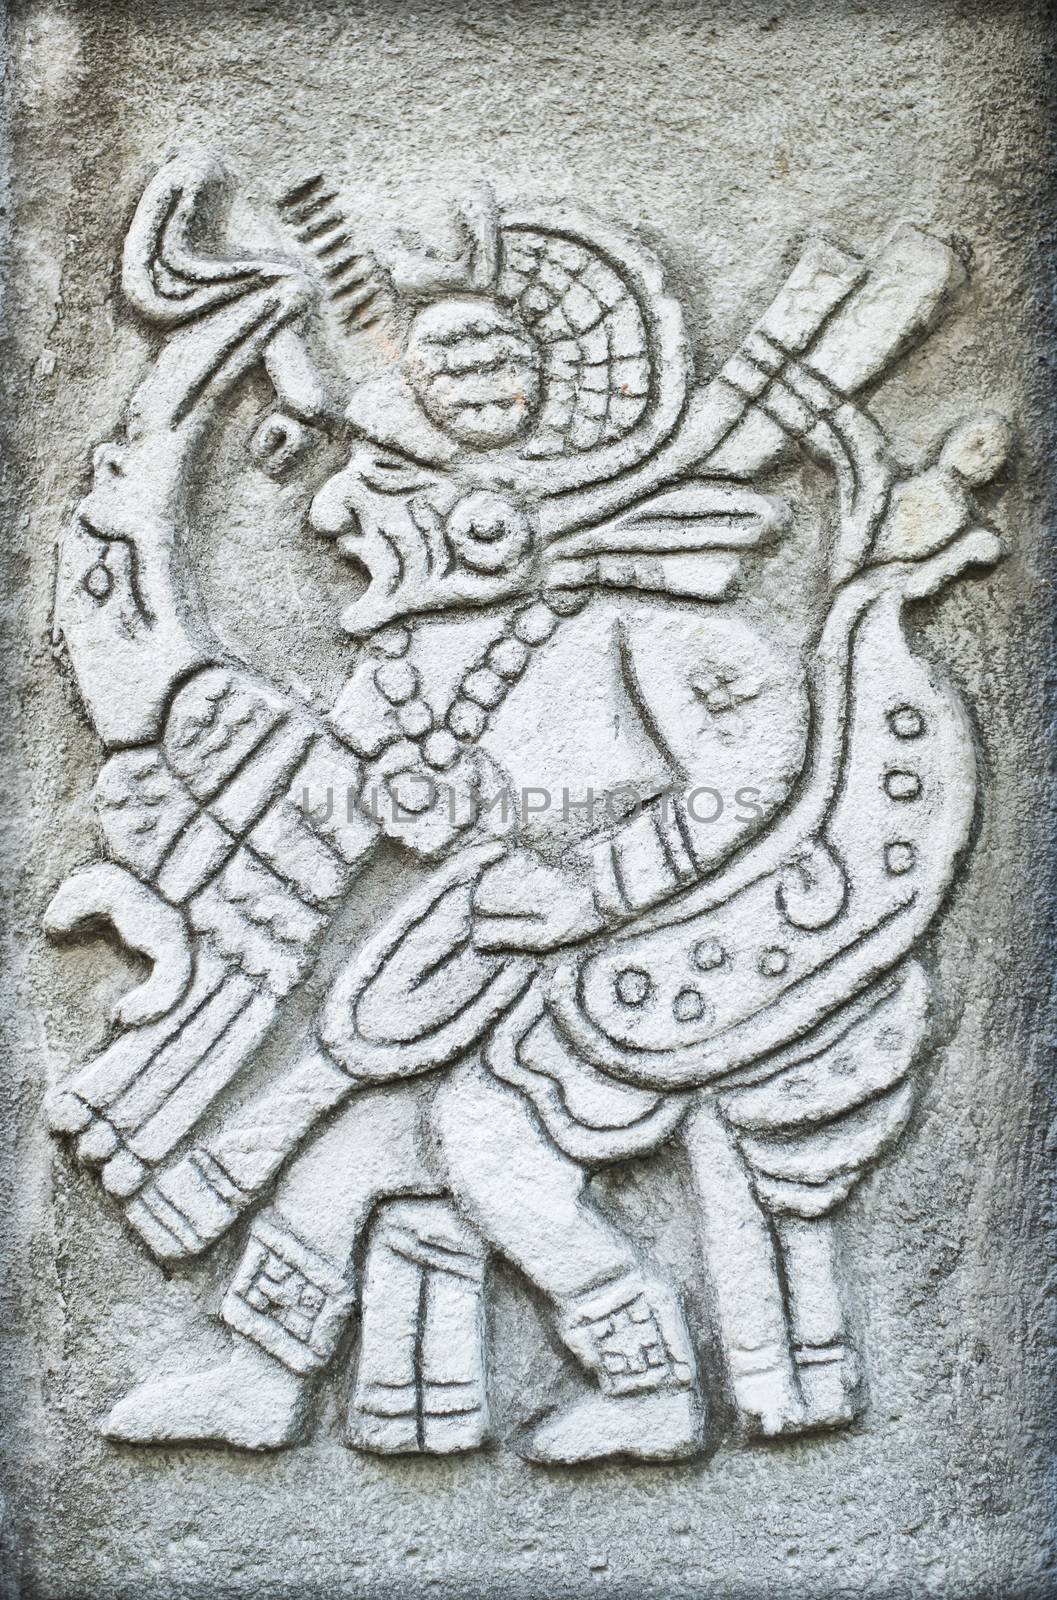 Ancient Mayan hieroglyph by furzyk73